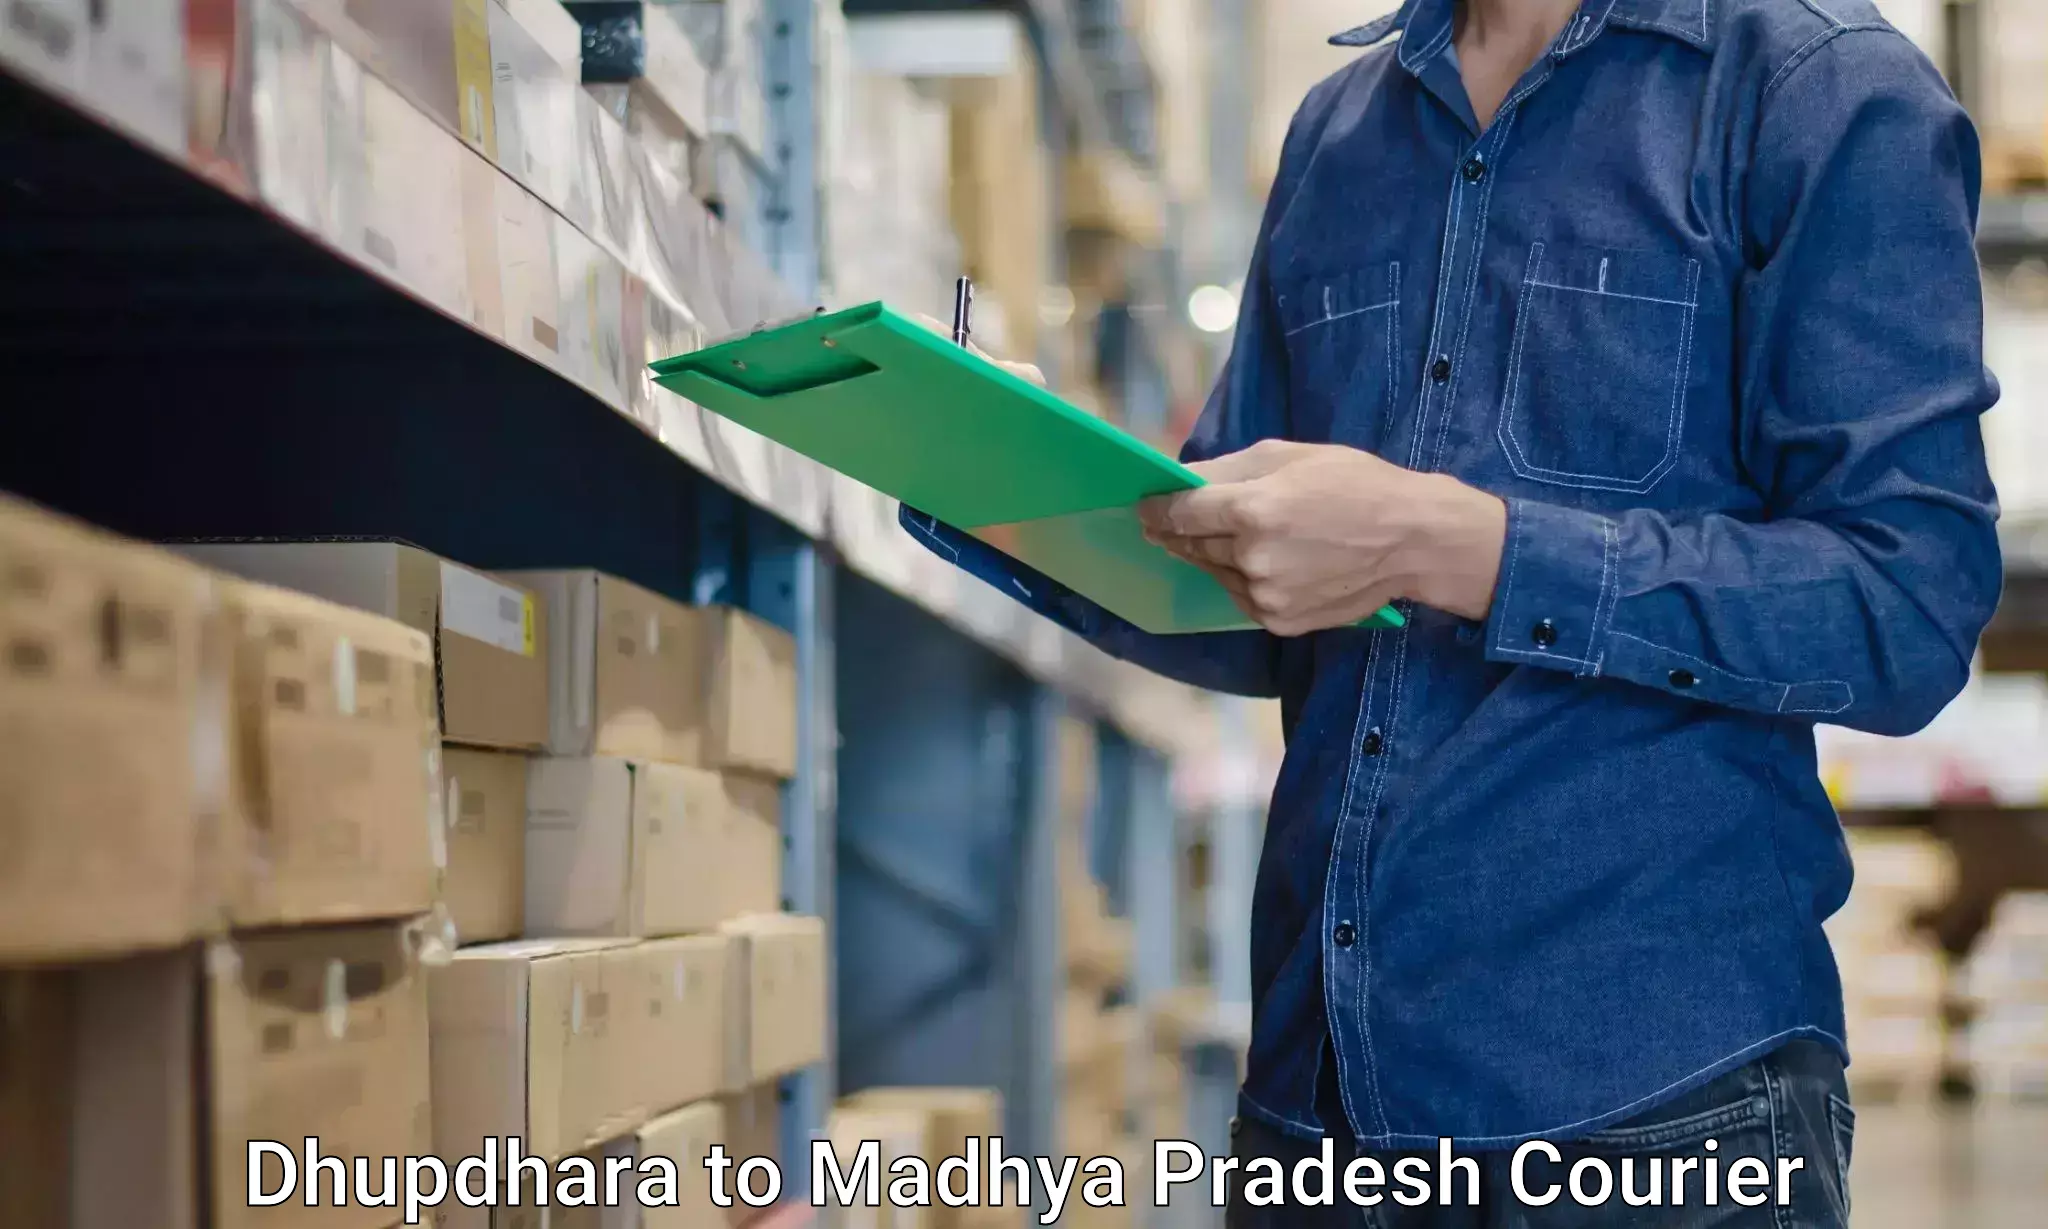 Moving and storage services Dhupdhara to Maheshwar